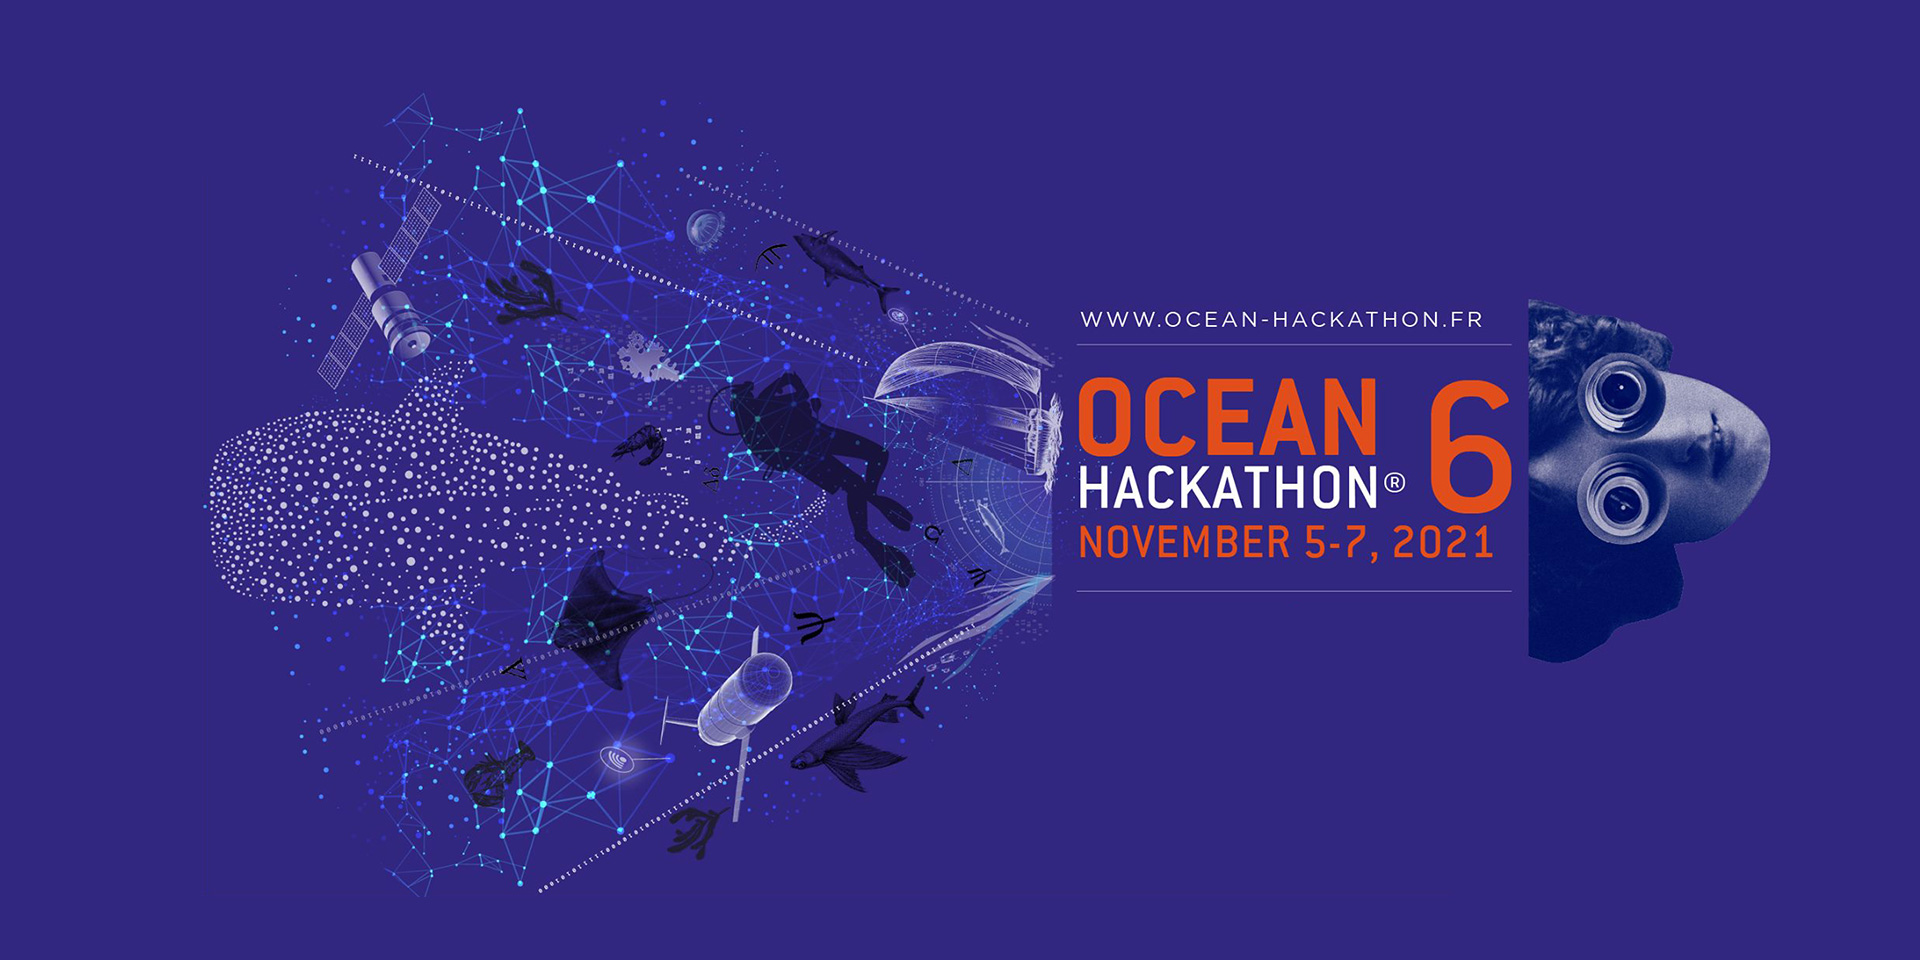 Océan Hackathon NC 2021